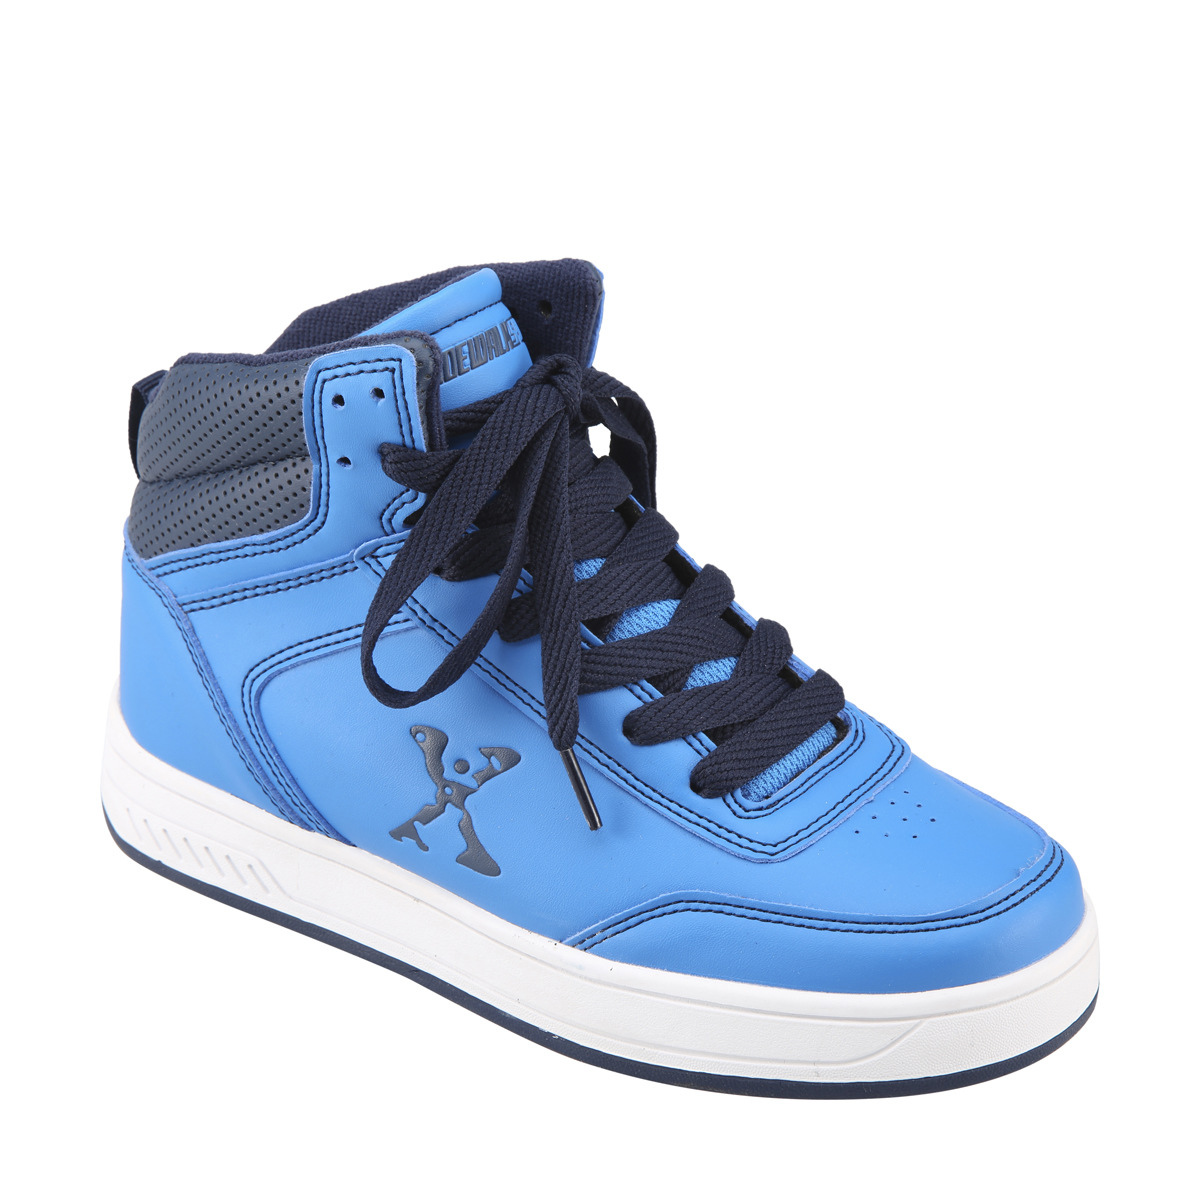 Sidewalk Sports Size 5 Blue Skate Shoes